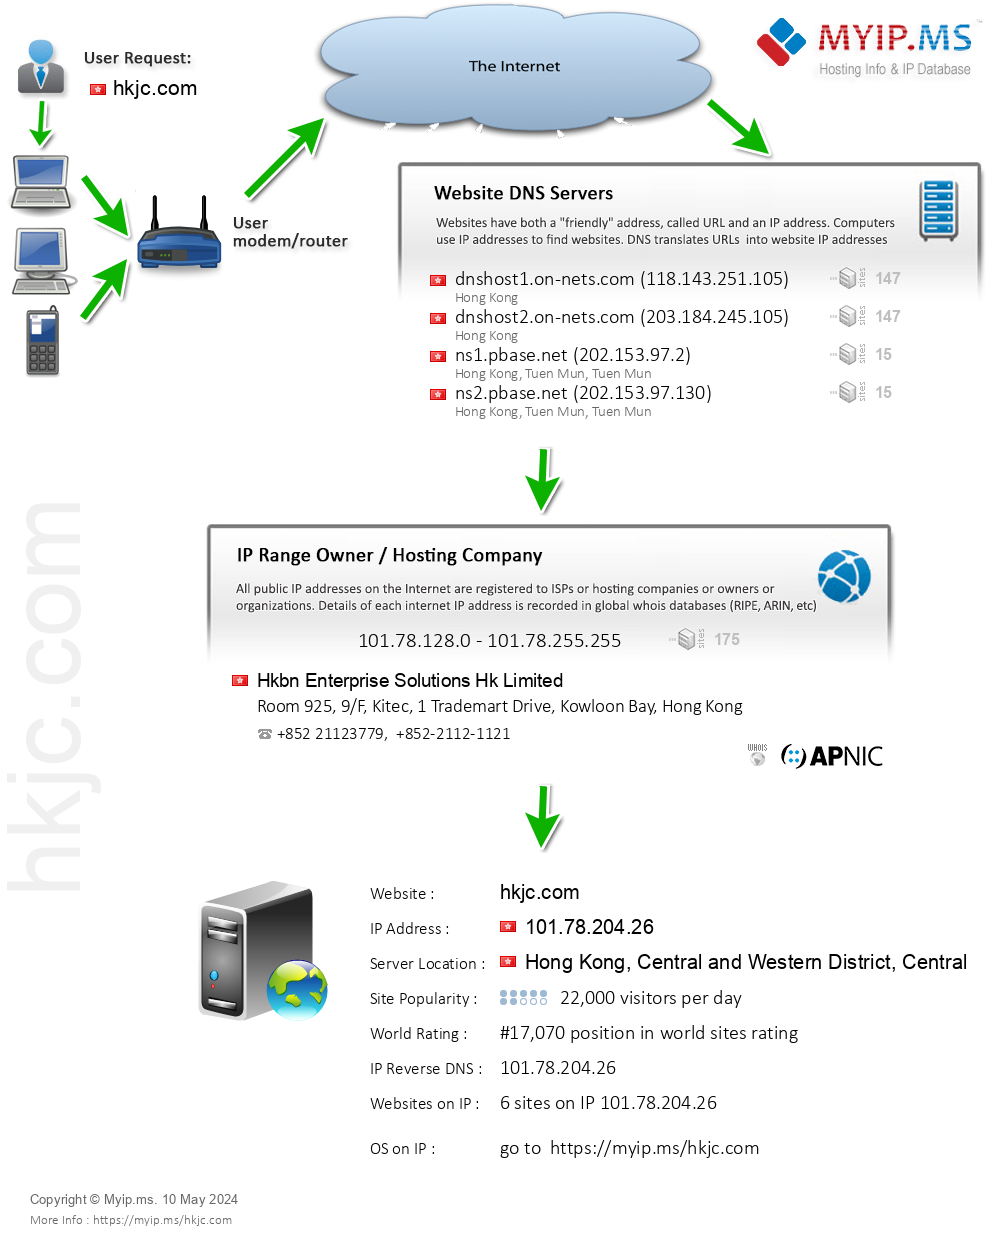 Hkjc.com - Website Hosting Visual IP Diagram